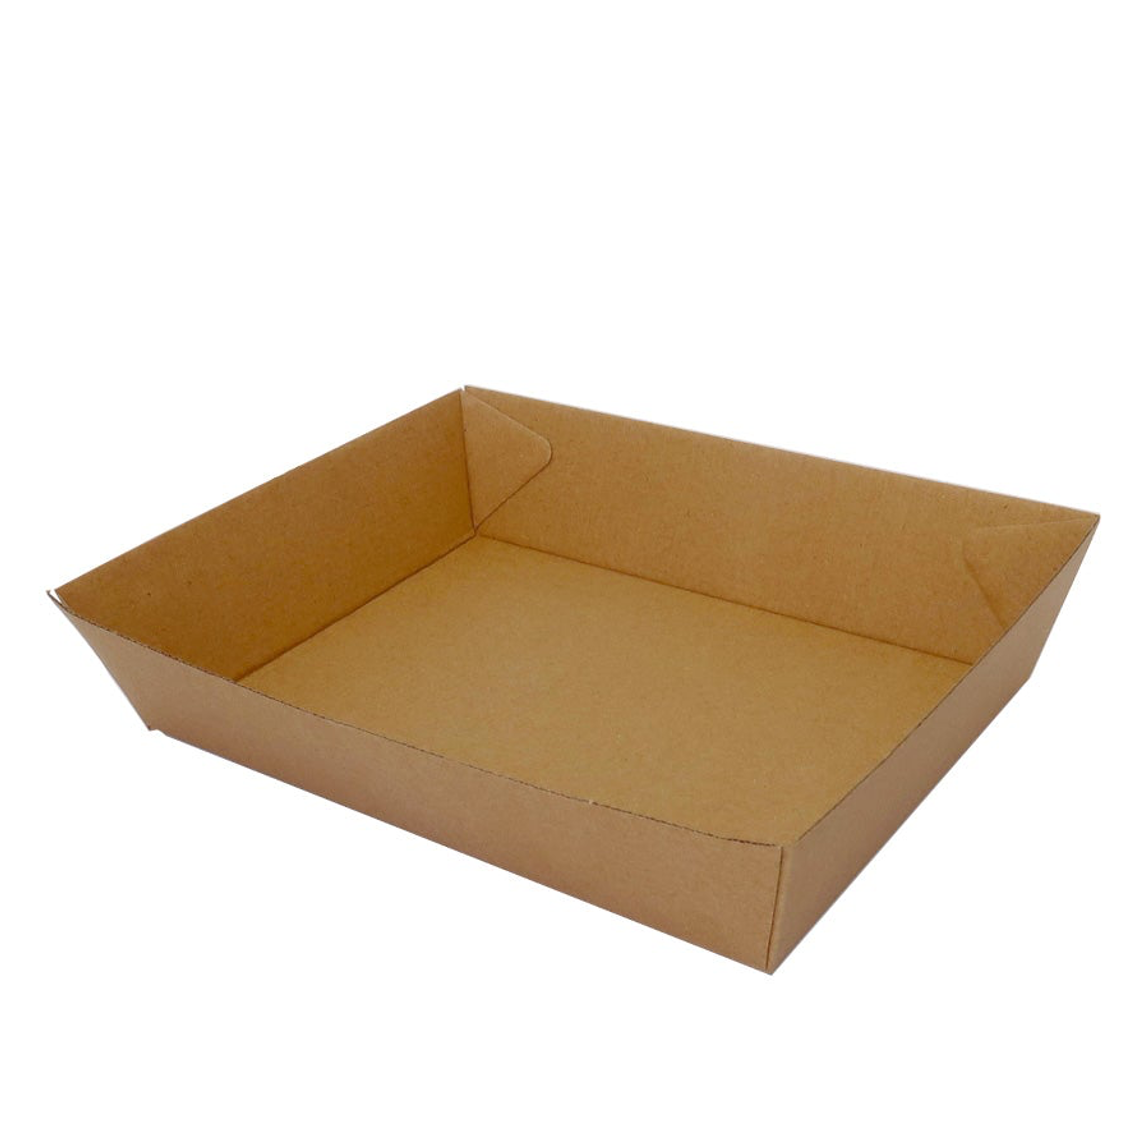 Cardboard Tray - Large